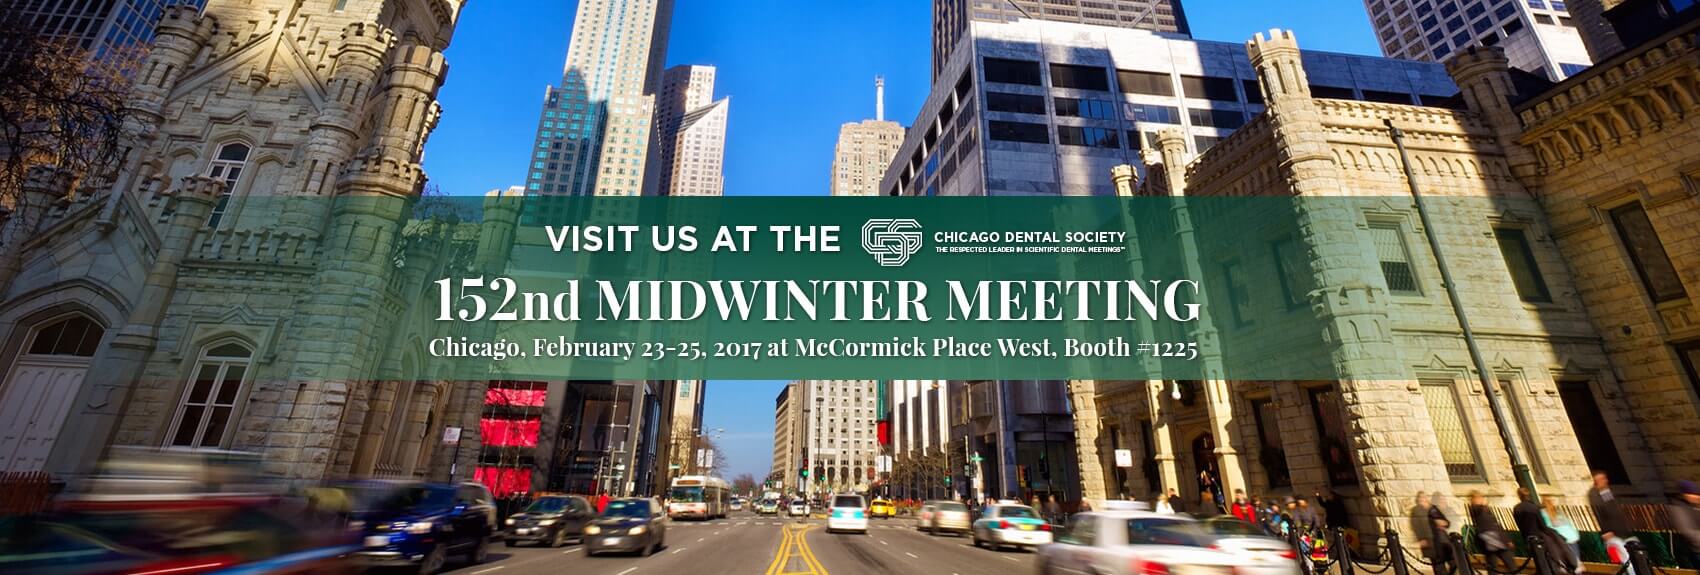 Slider Midwinter Meeting Chicago MCC Dental